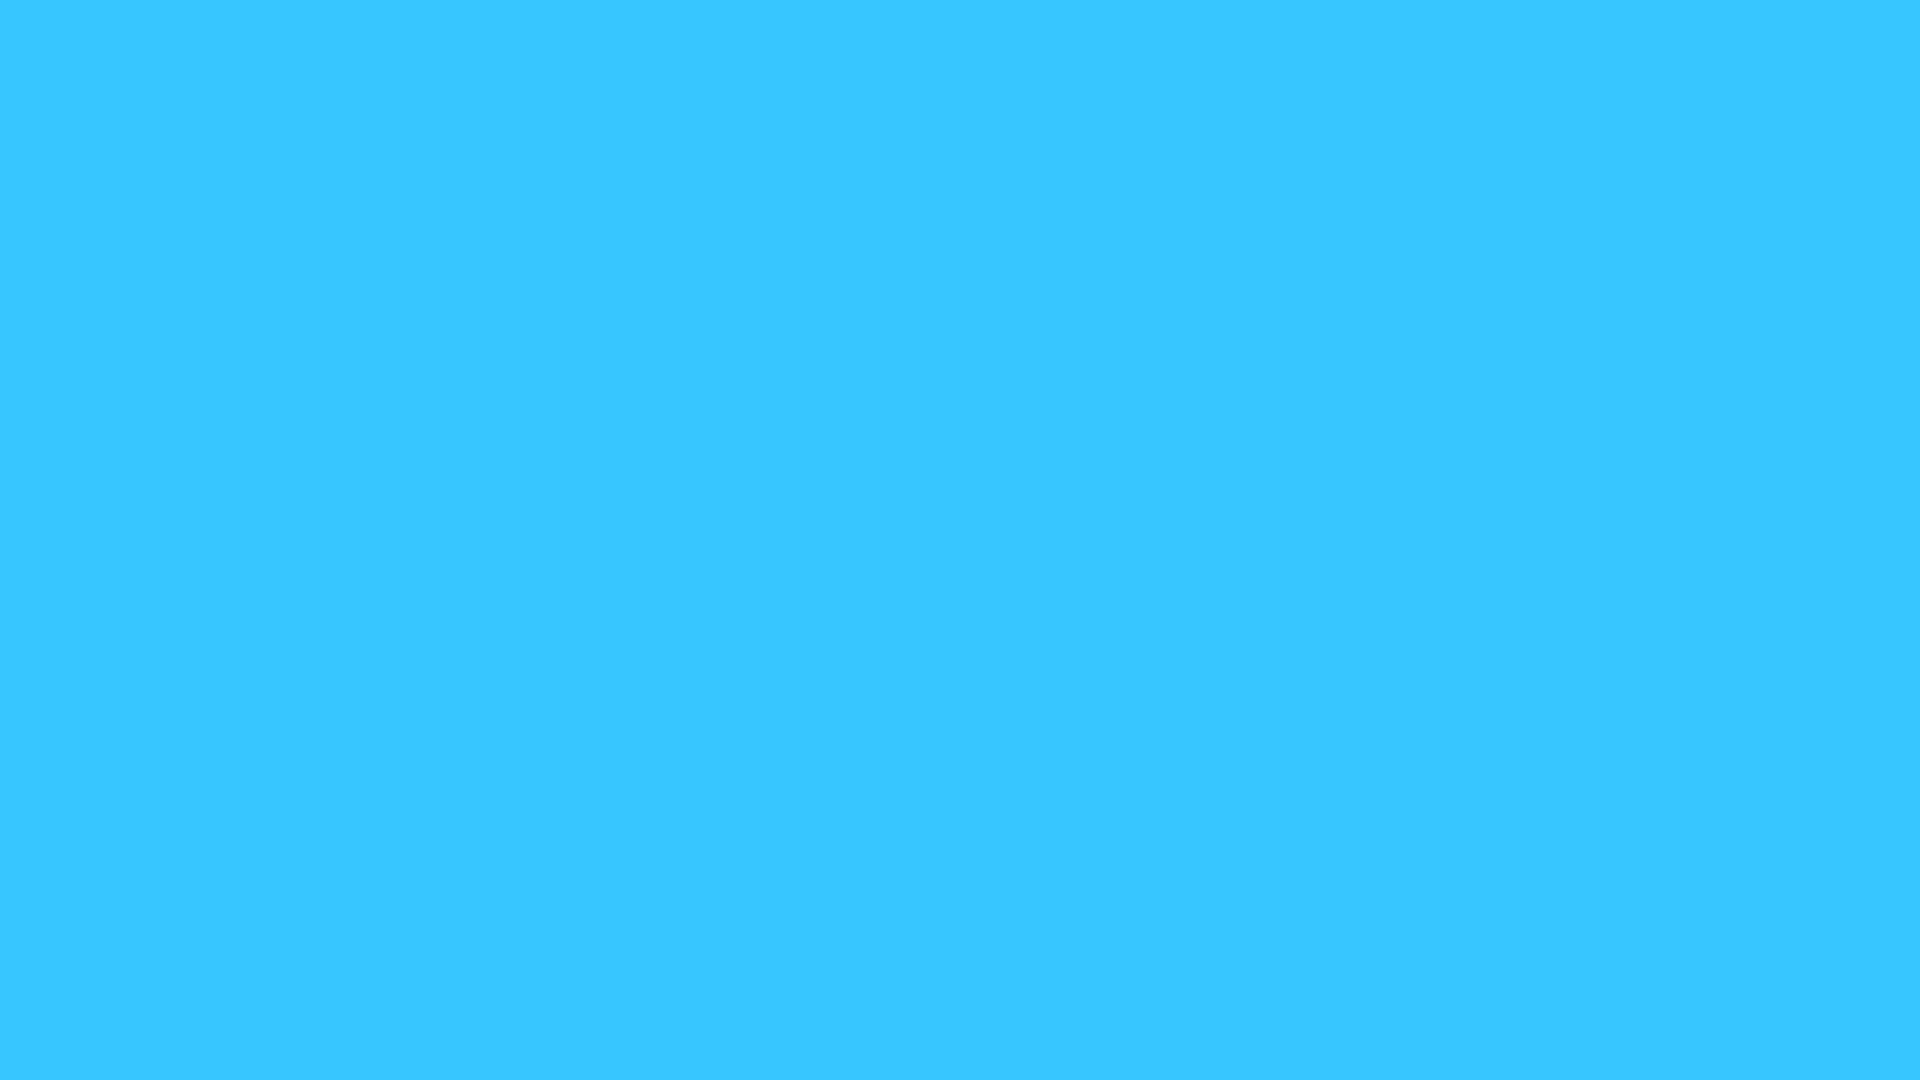 100+] Solid Light Blue Background s |